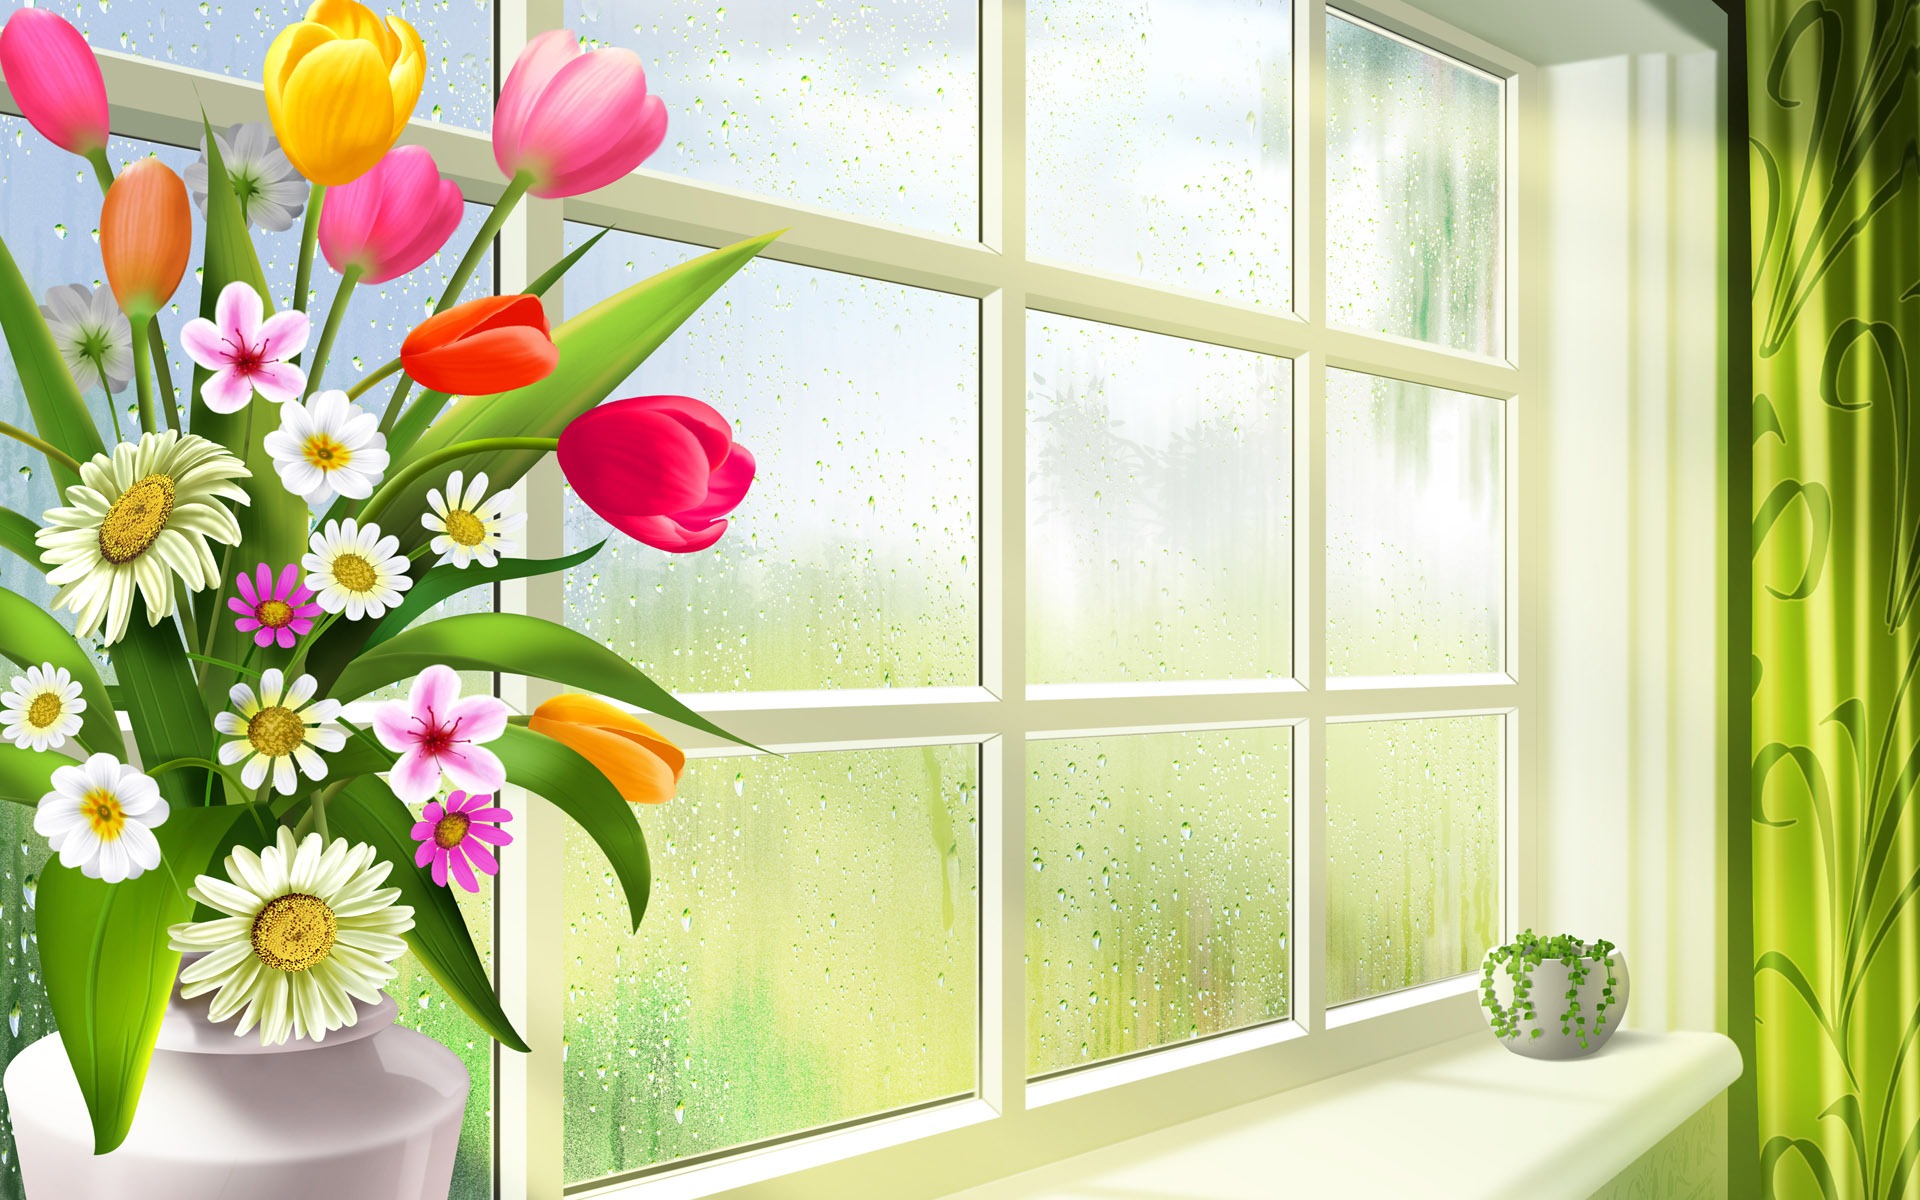 good morning hd wallpaper,flower,window,plant,wall,room